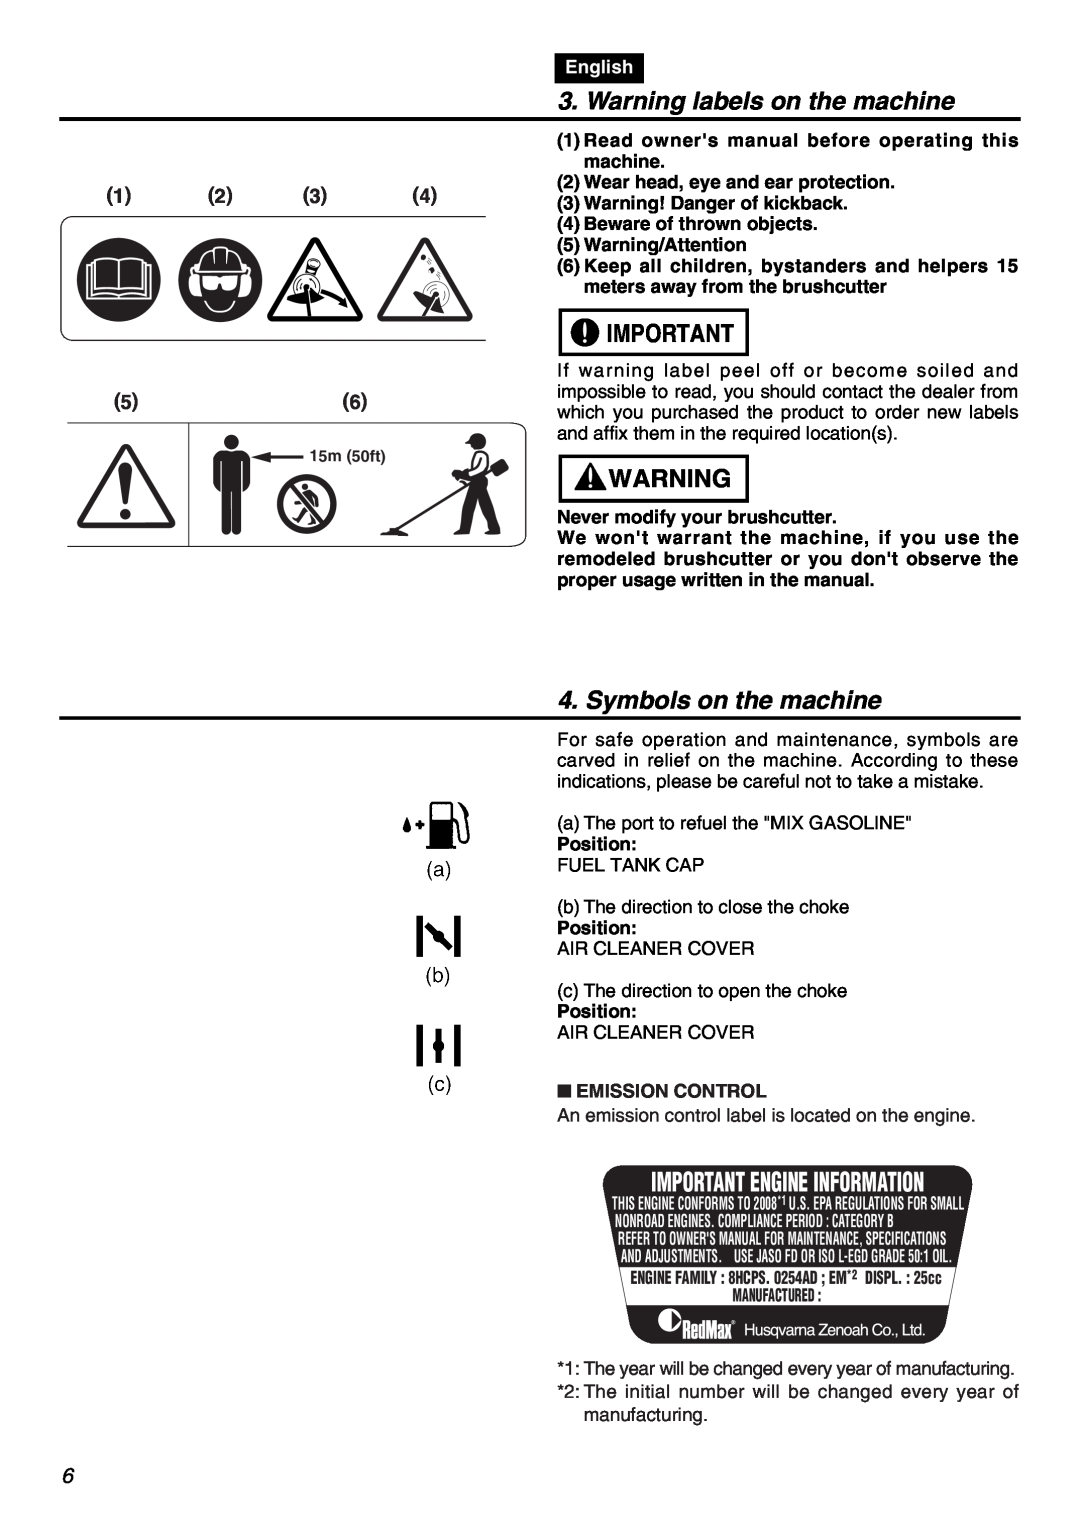 Zenoah BT250 manual Warning labels on the machine, Symbols on the machine, Important Engine Information, English 